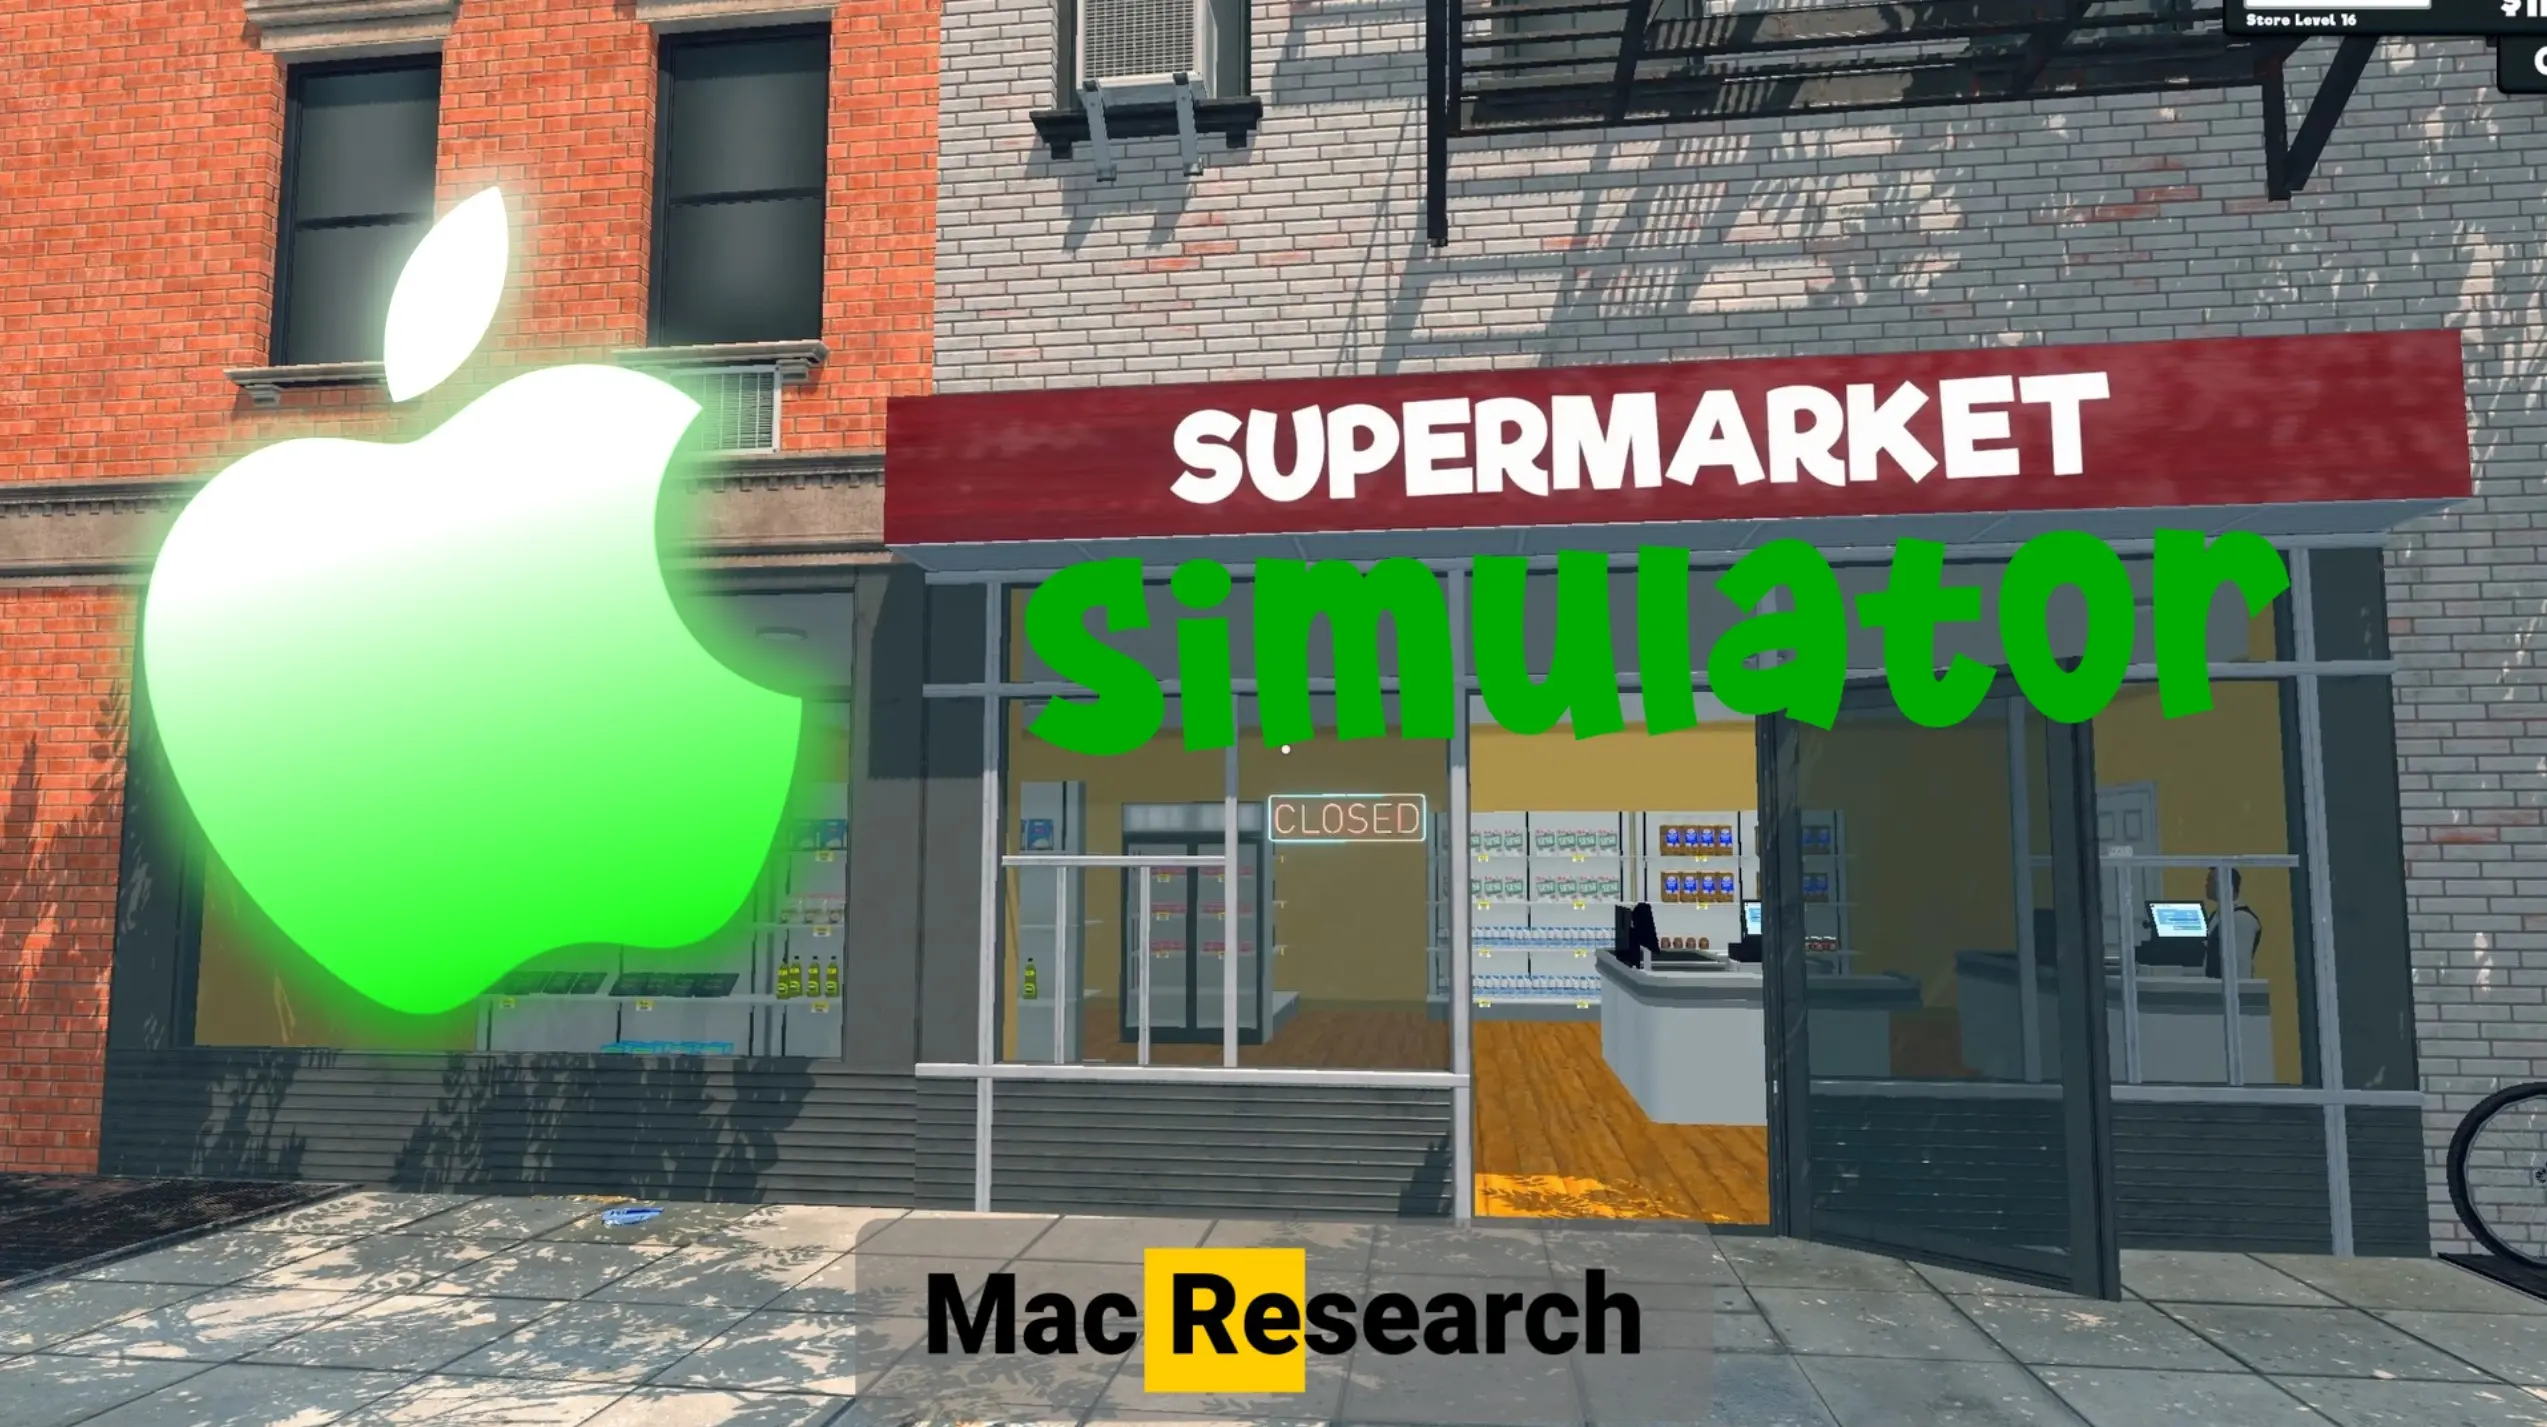 Supermarket Simulator on Mac: Working Methods And Performance